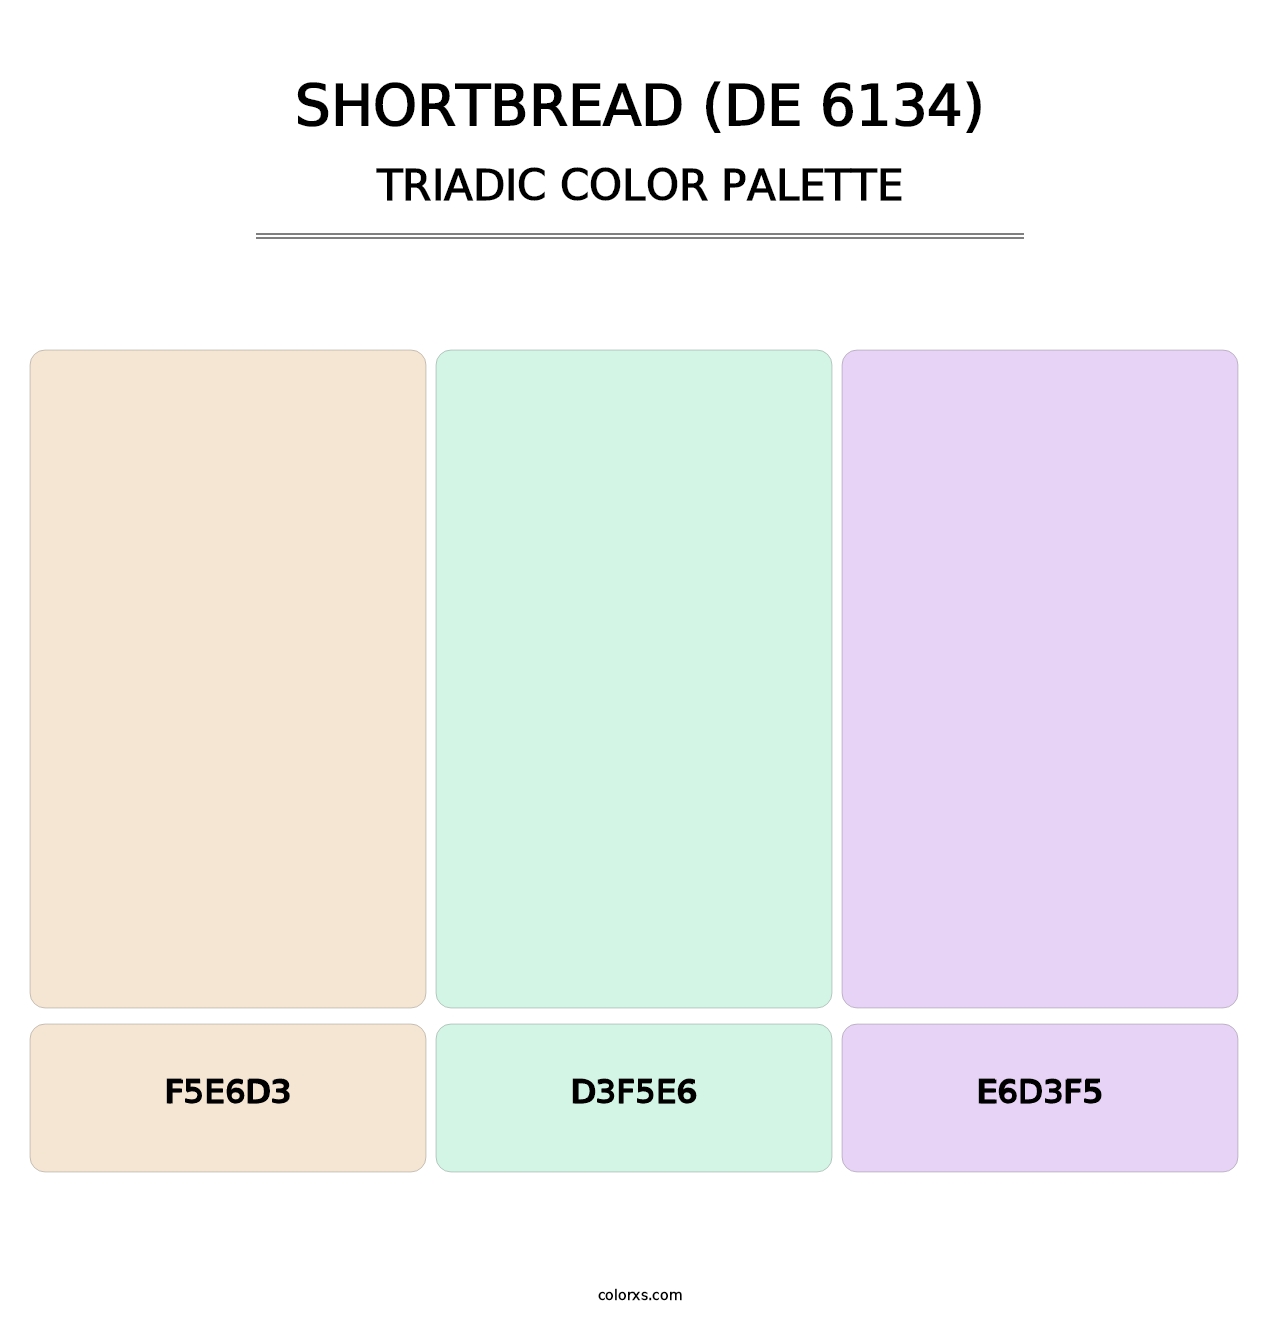 Shortbread (DE 6134) - Triadic Color Palette